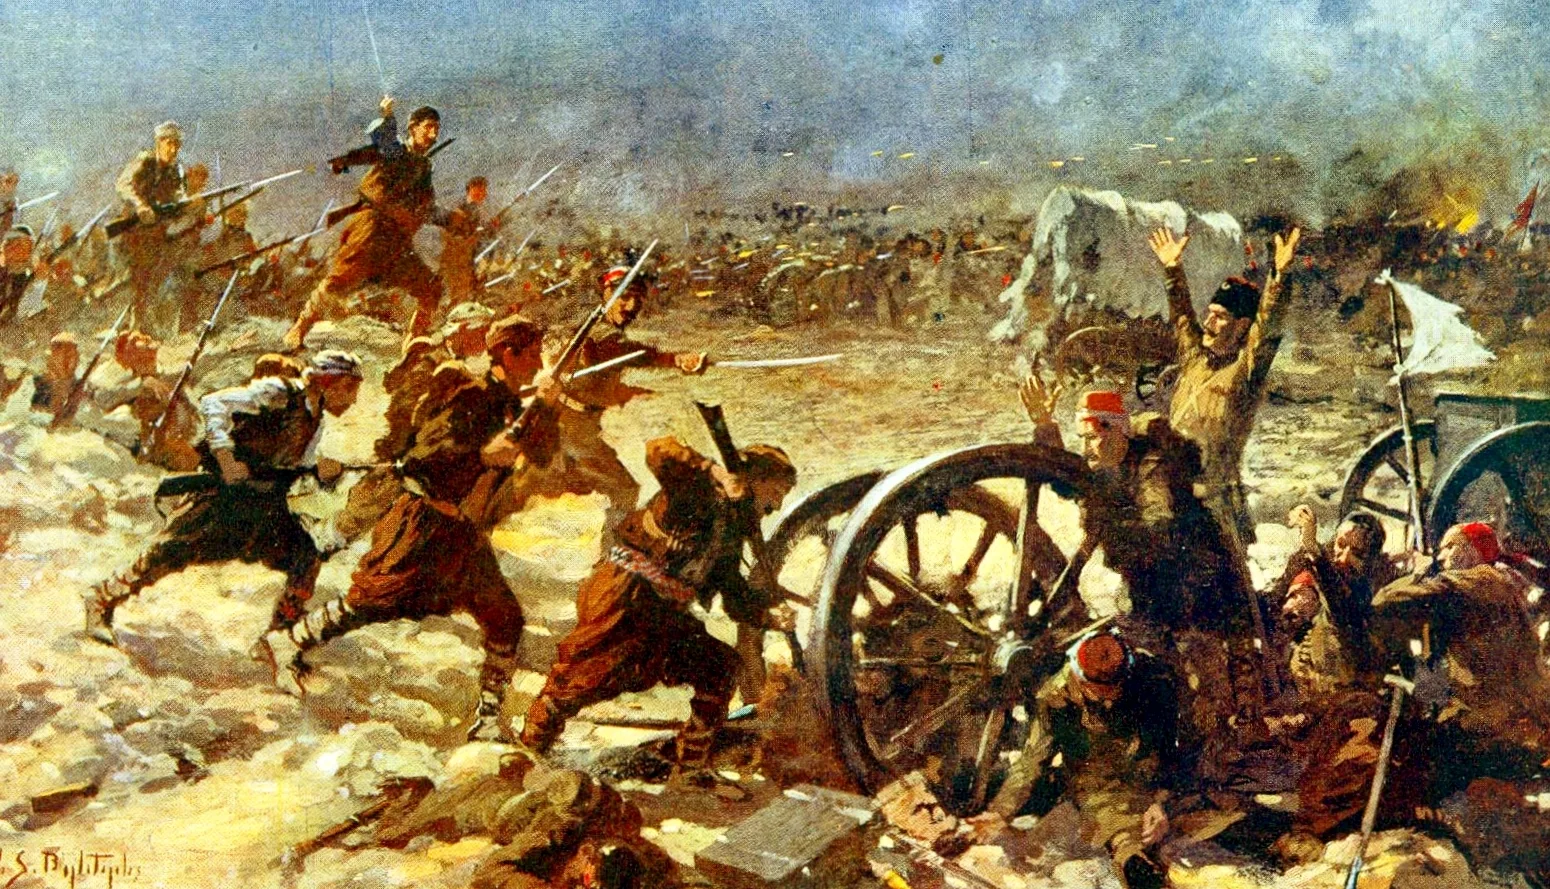 bulgarian-infantry-assault-successfully-the-ottoman-lines-at-kirklareli-during-the-first-balkan-war-1912-1913